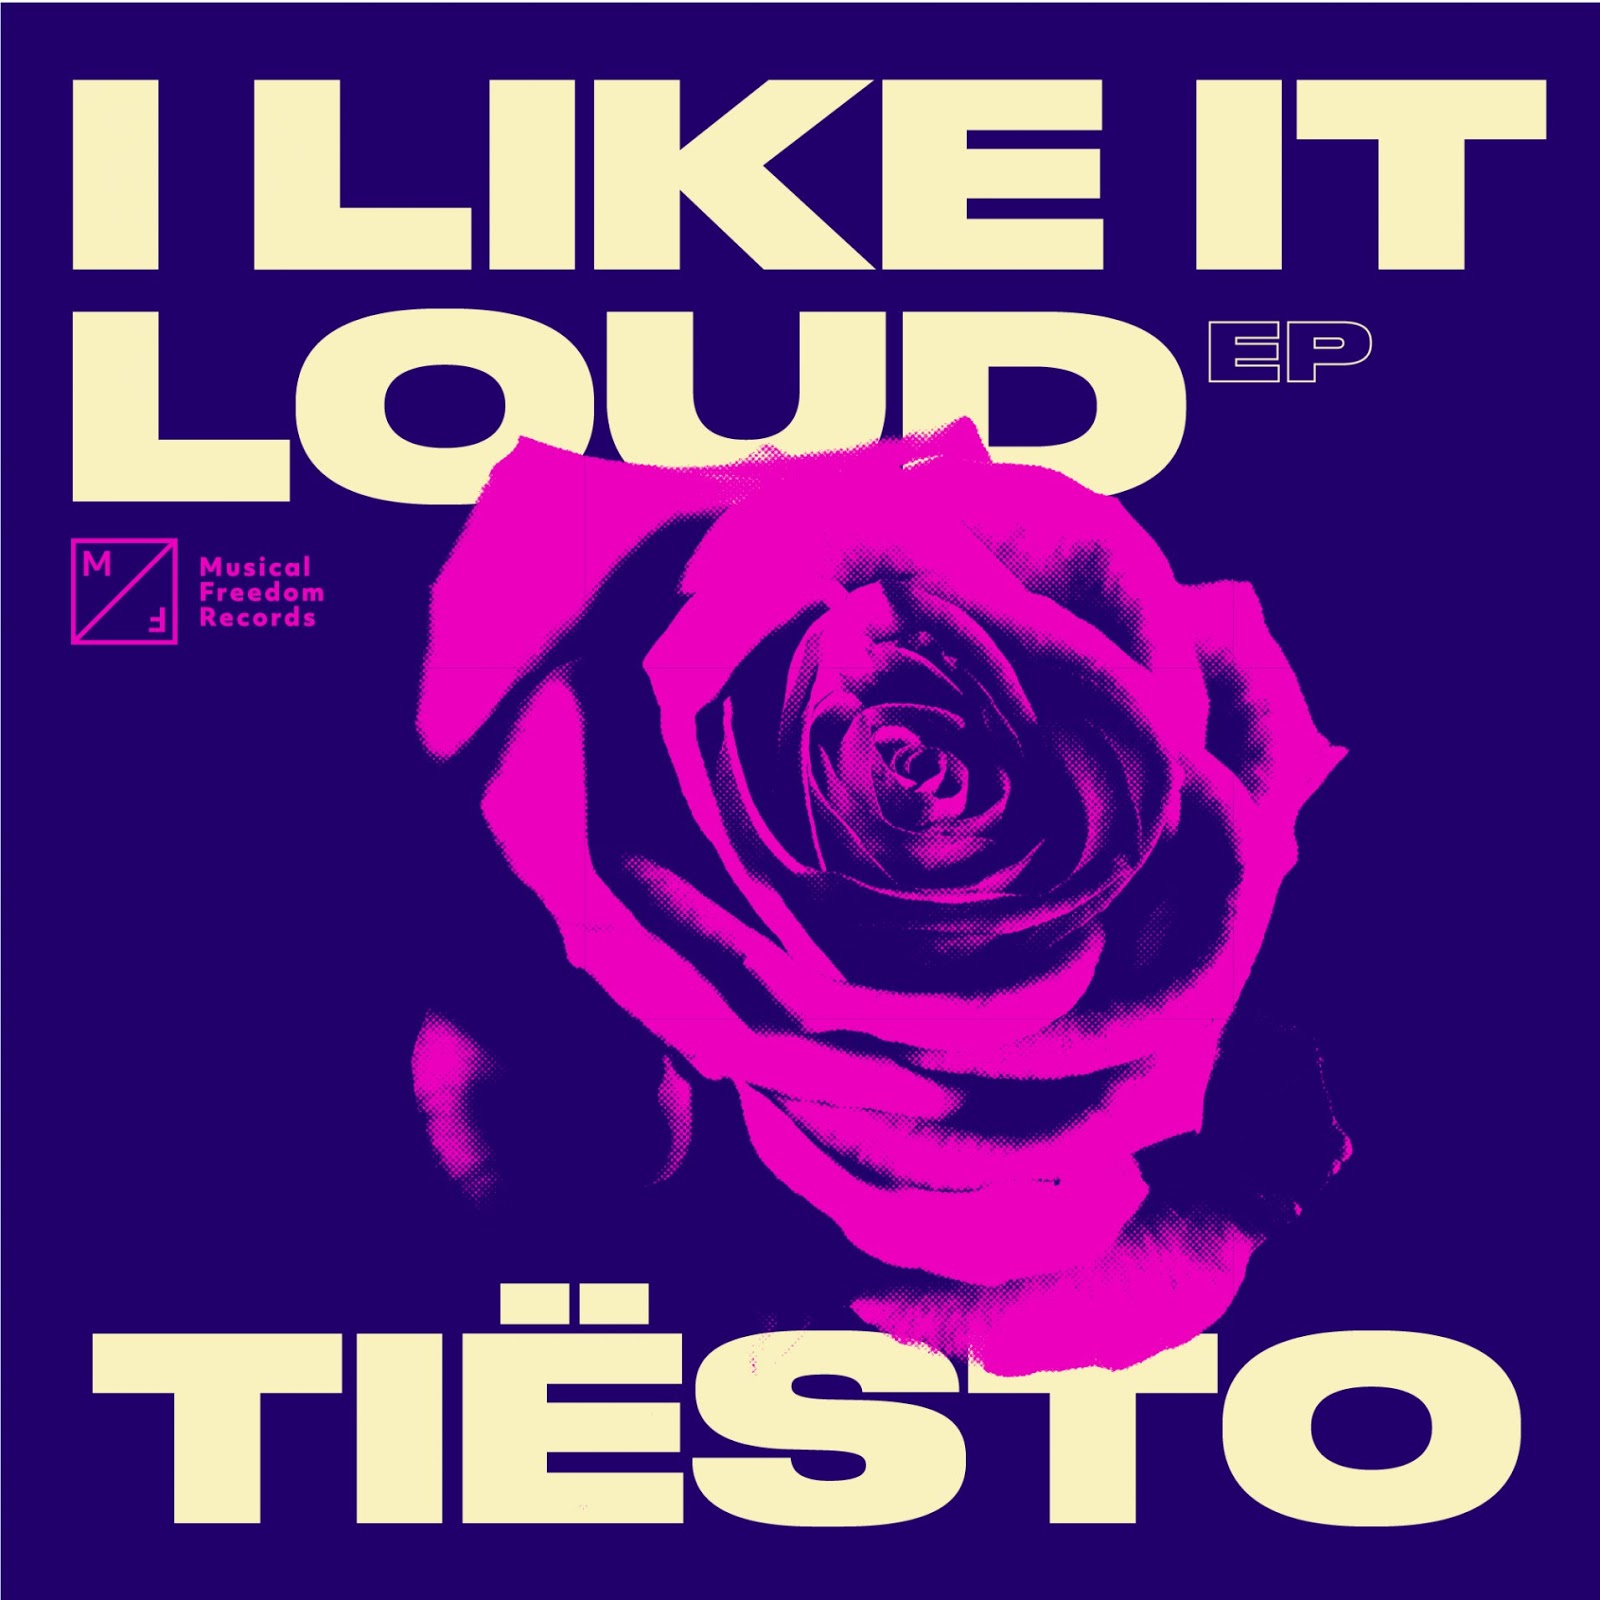 Tiesto - I Like It Loud EP [Various Style]